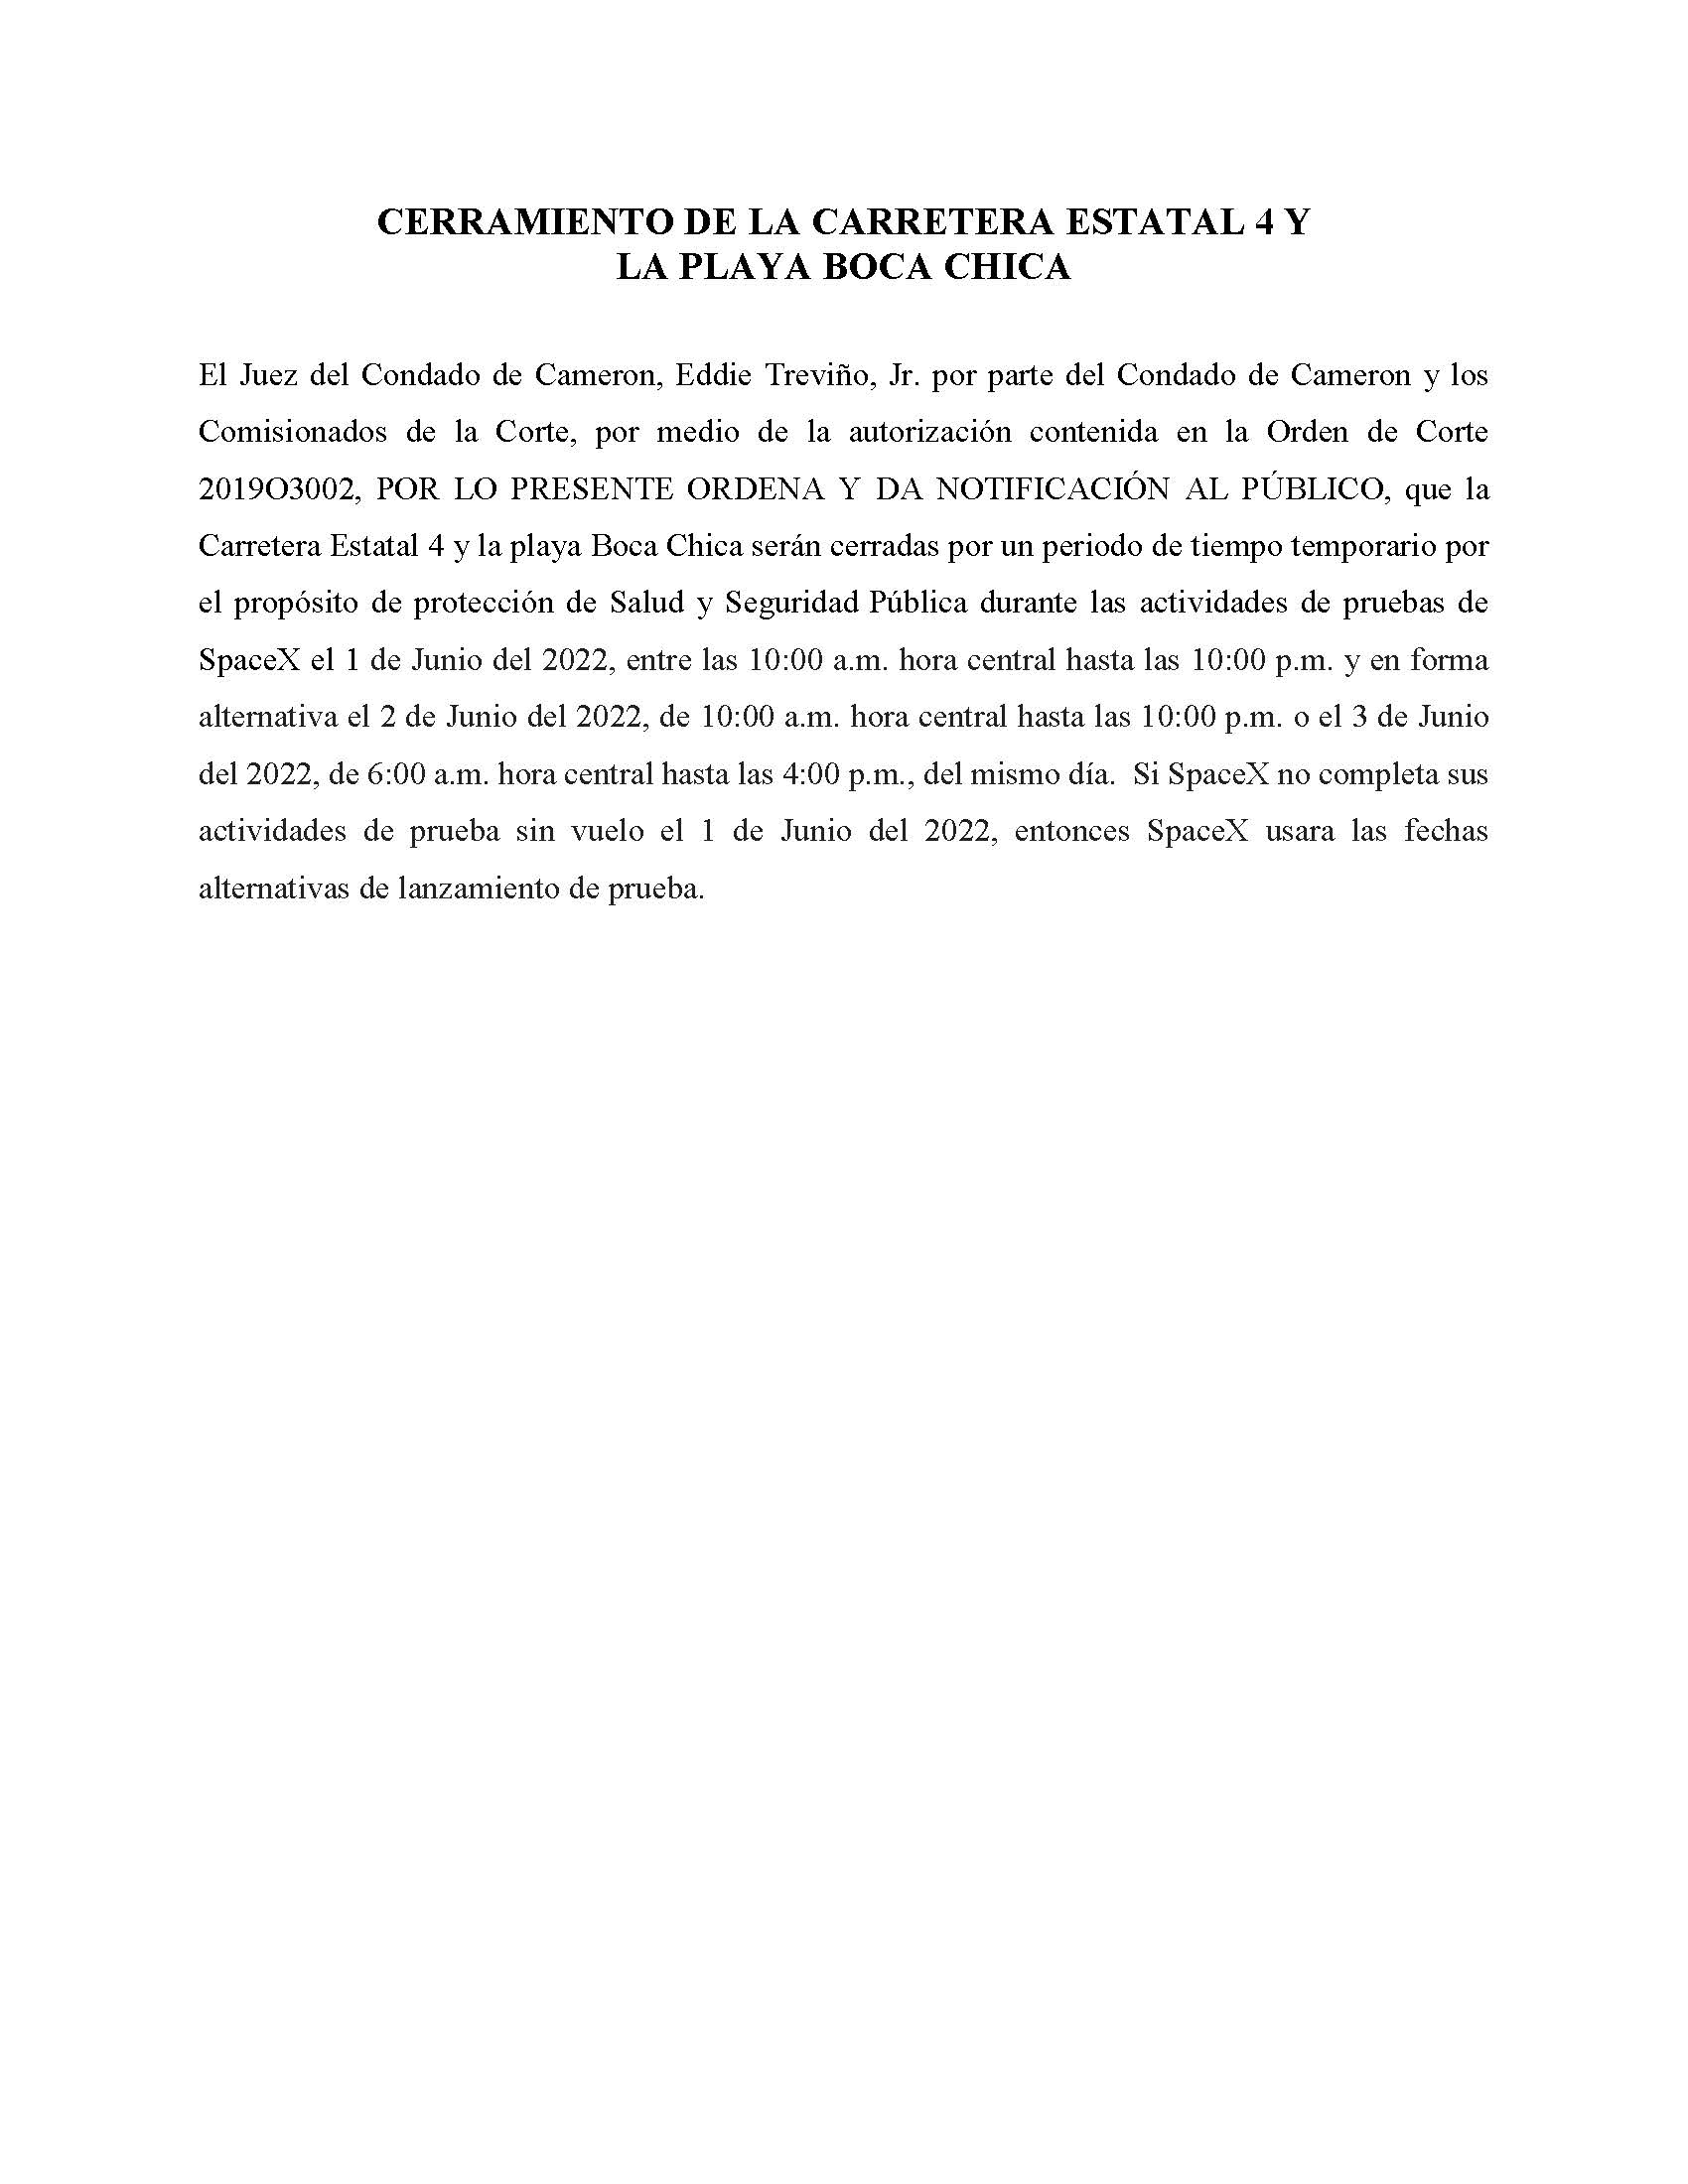 ORDER.CLOSURE OF HIGHWAY 4 Y LA PLAYA BOCA CHICA.SPANISH.06.01.2022